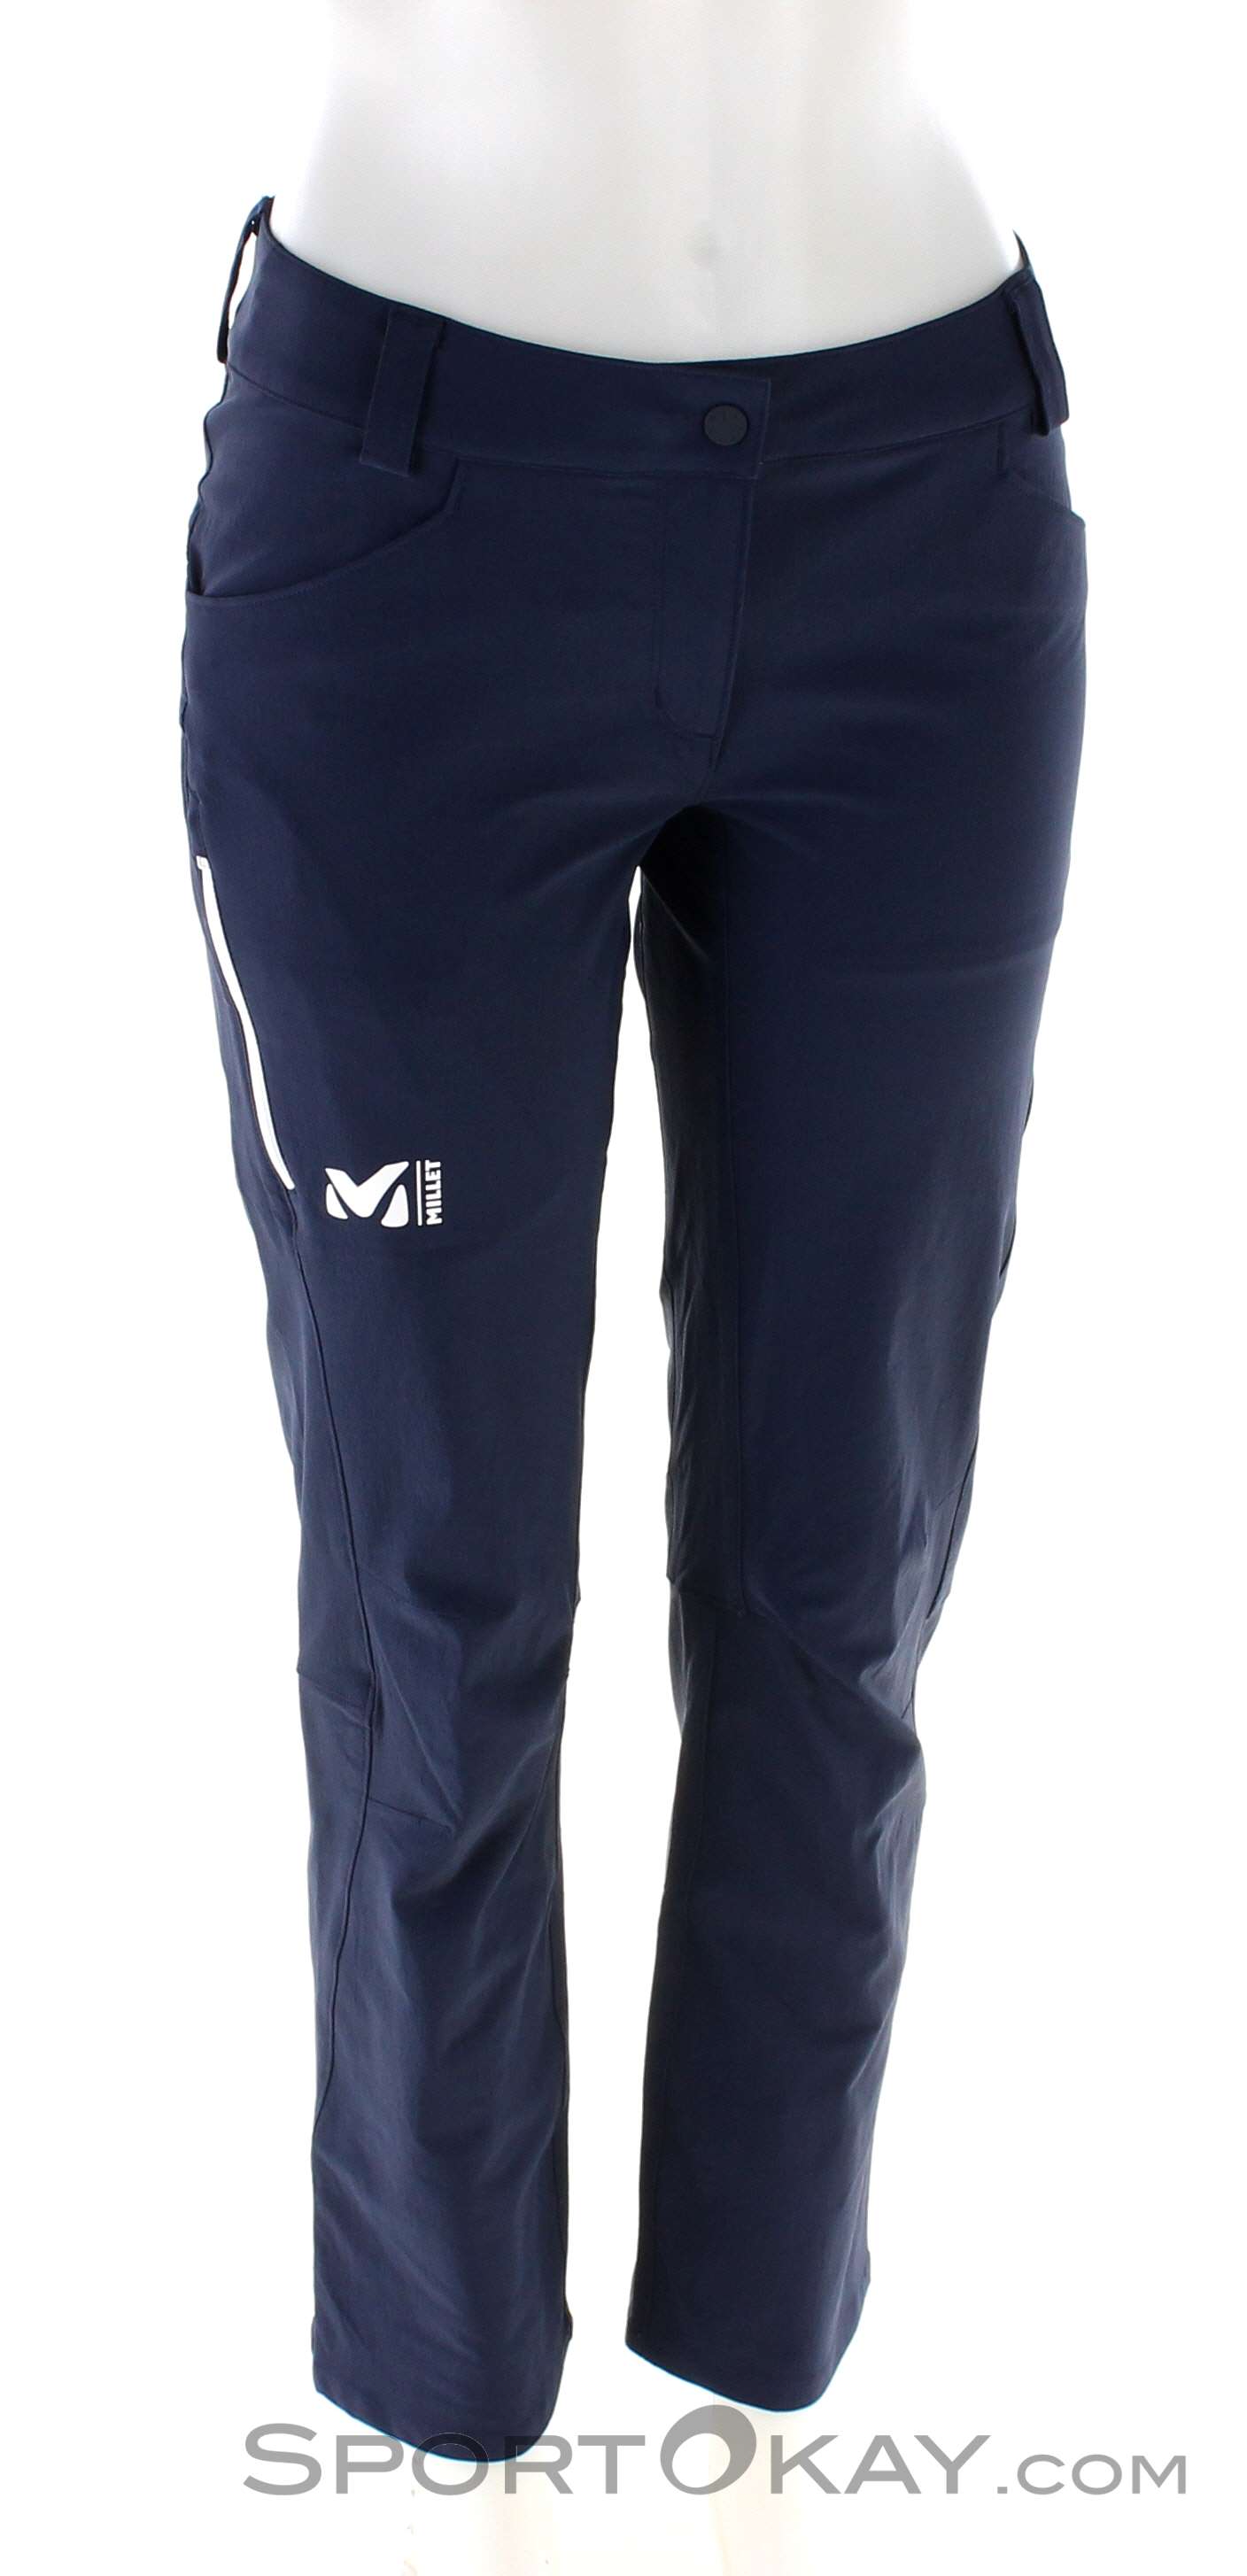 Millet Stretchy II PT Mujer Pantalón para exteriores - Pantalones -  Indumentaria de aire libre - Aire libre - Todos